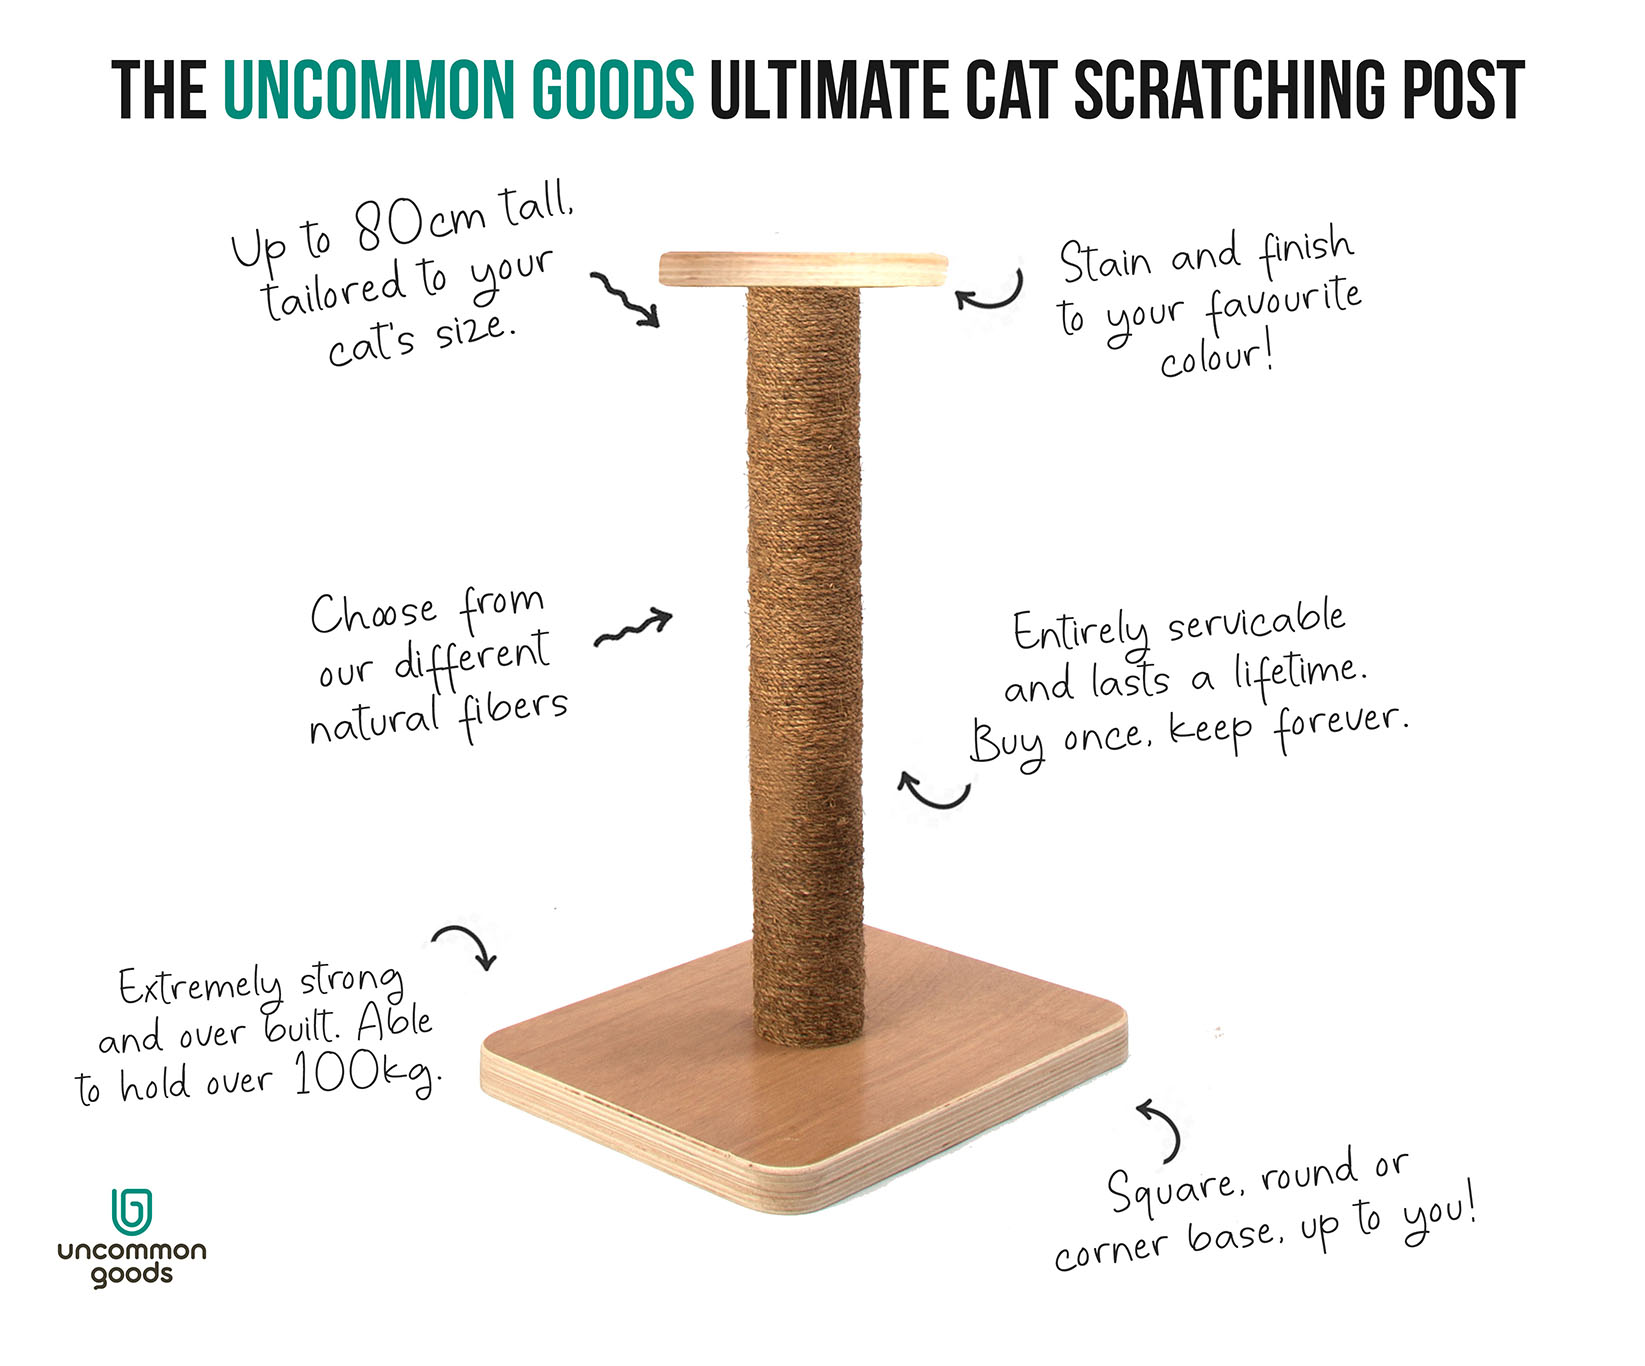 Uncommon Goods Singapore builds and designs unique cat scratching posts